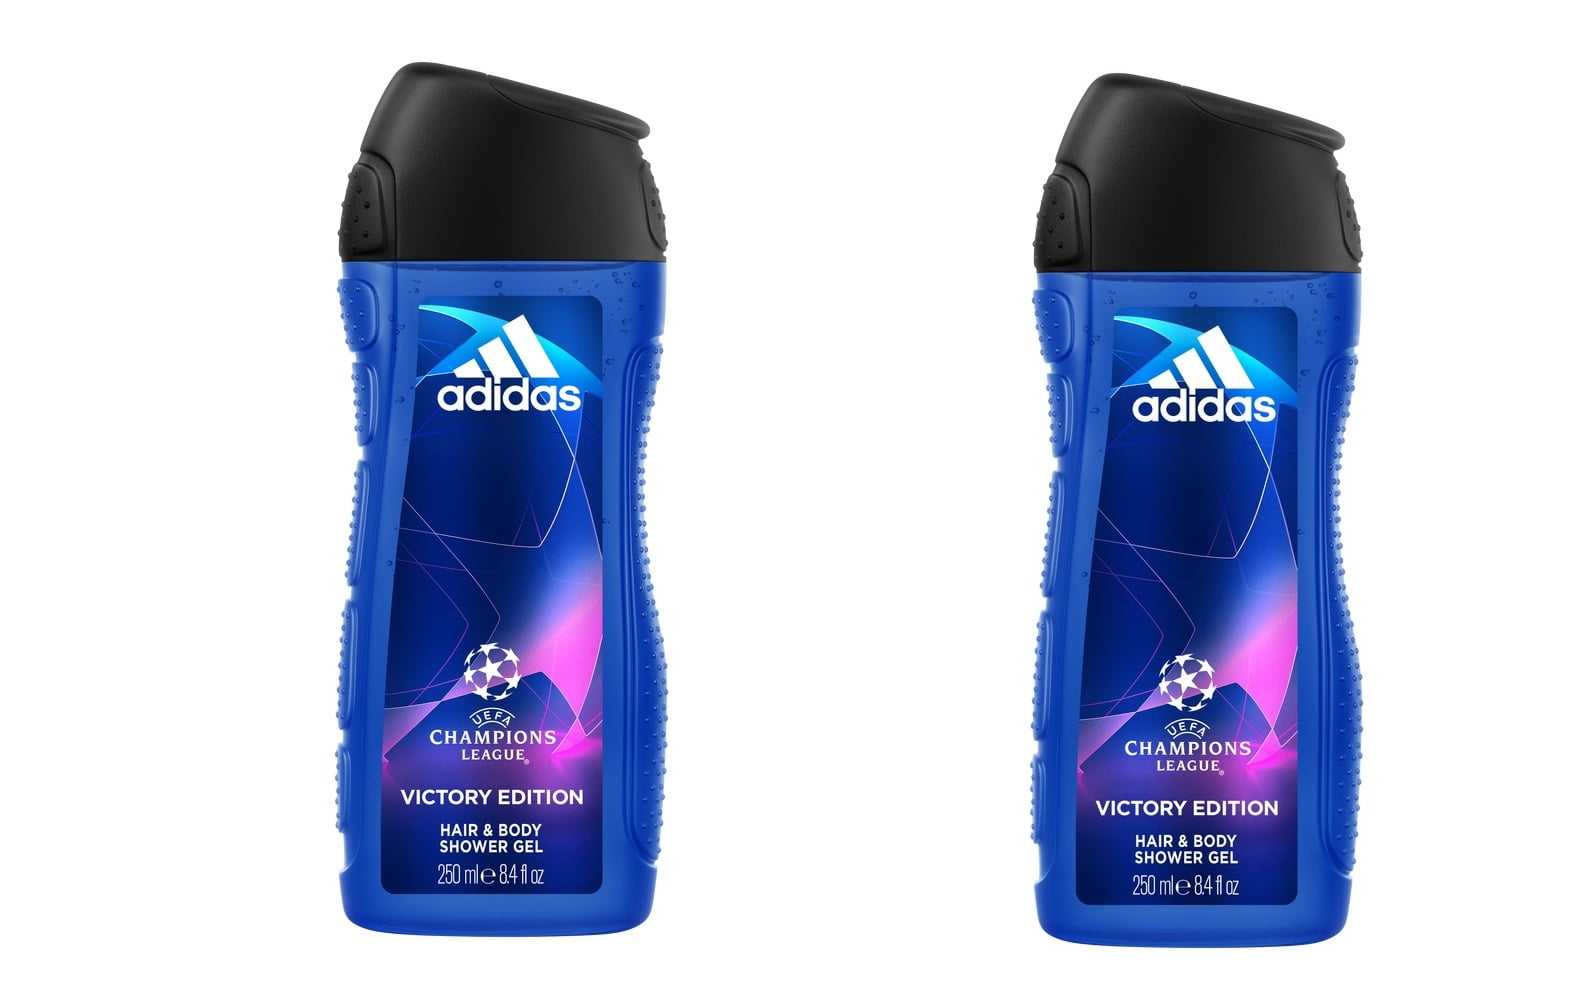 frío Volver a disparar Cabra 2 Pack of Adidas Shower Gel UEFA Champions League Victory Edition  250ml/8.4oz/each - Walmart.com